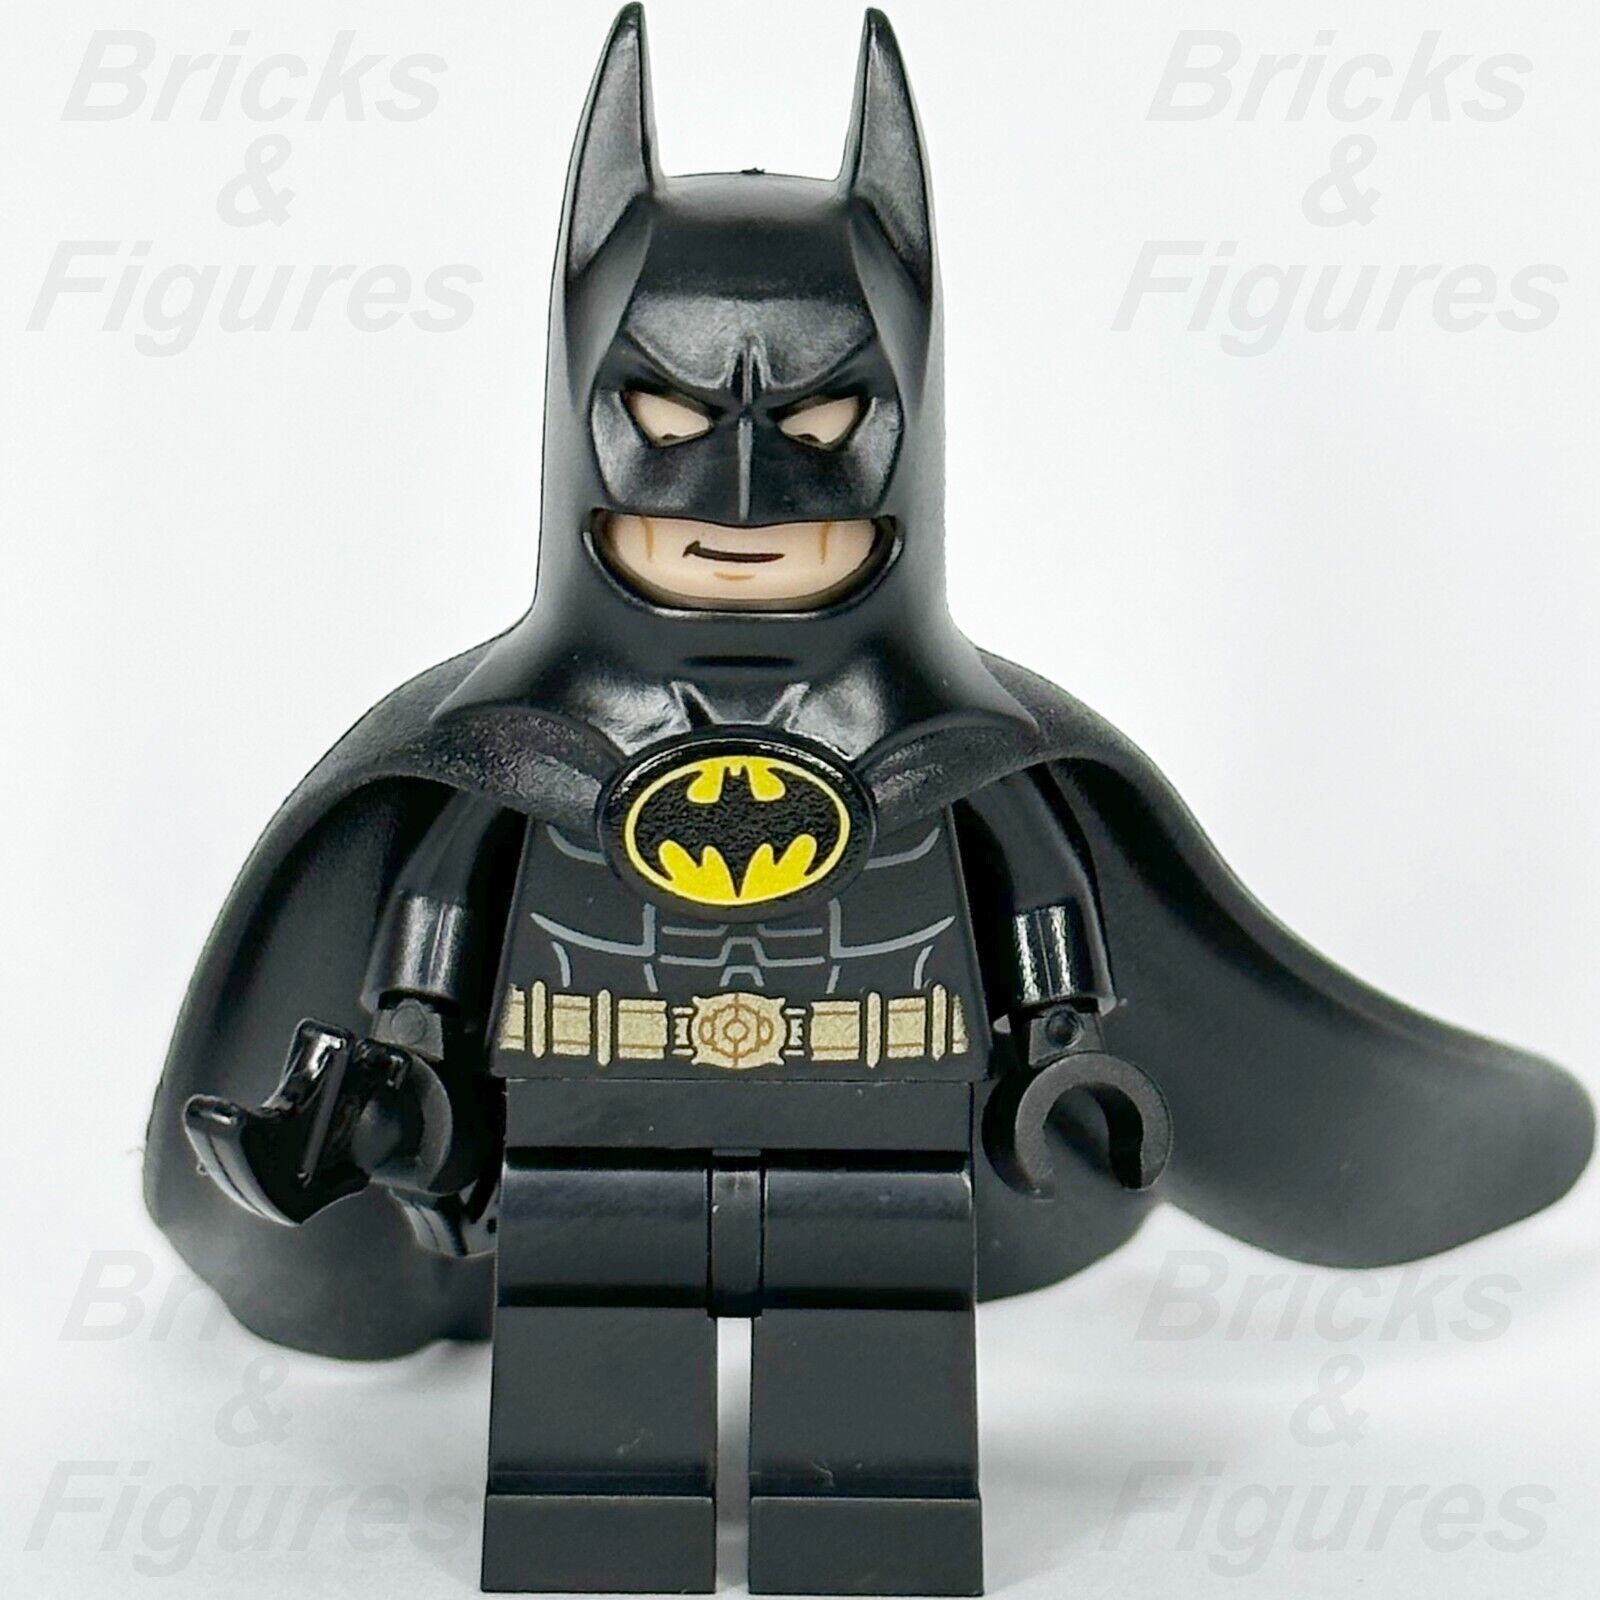 LEGO Super Heroes Batman 1992 Minifigure DC Tim Burton's Batman 30653 sh880 3